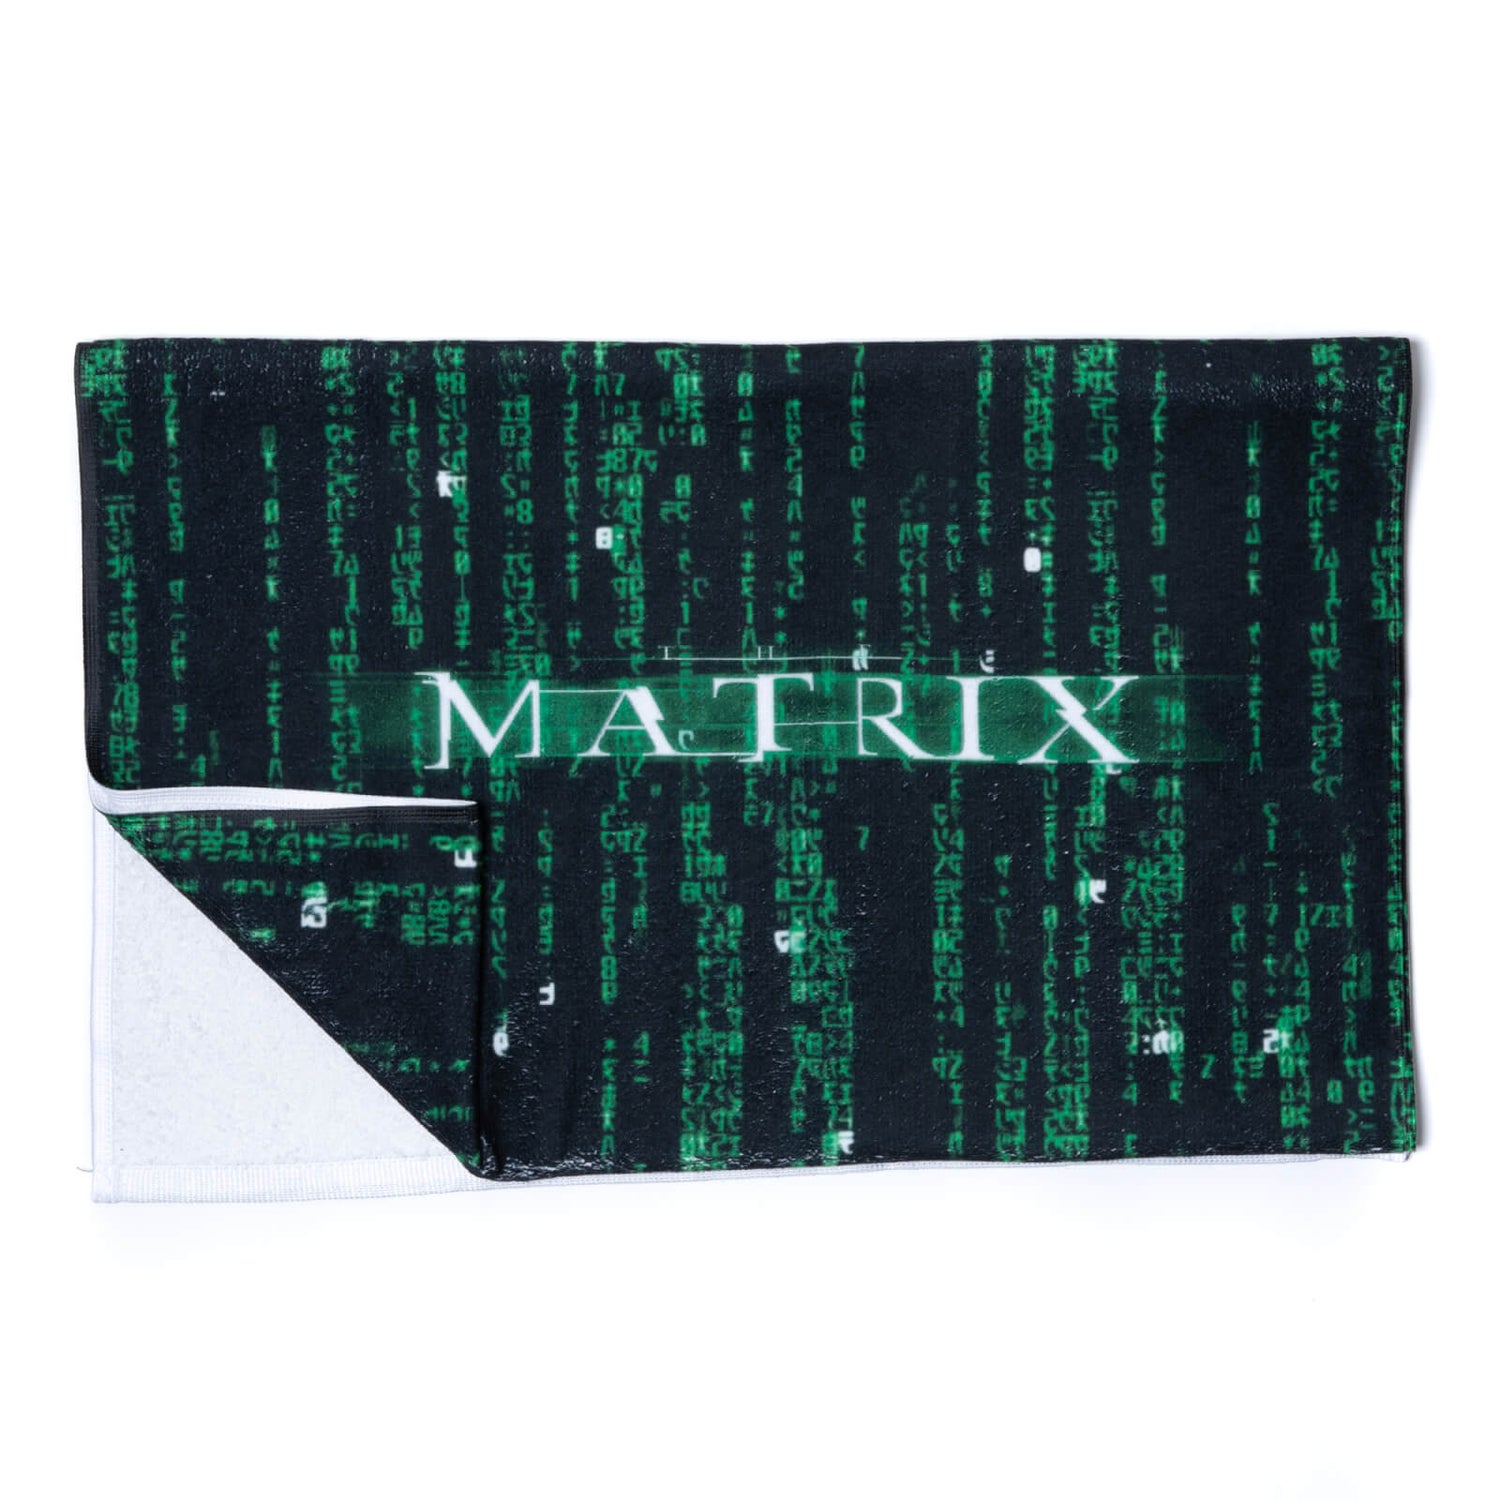 The Matrix Petite Serviette